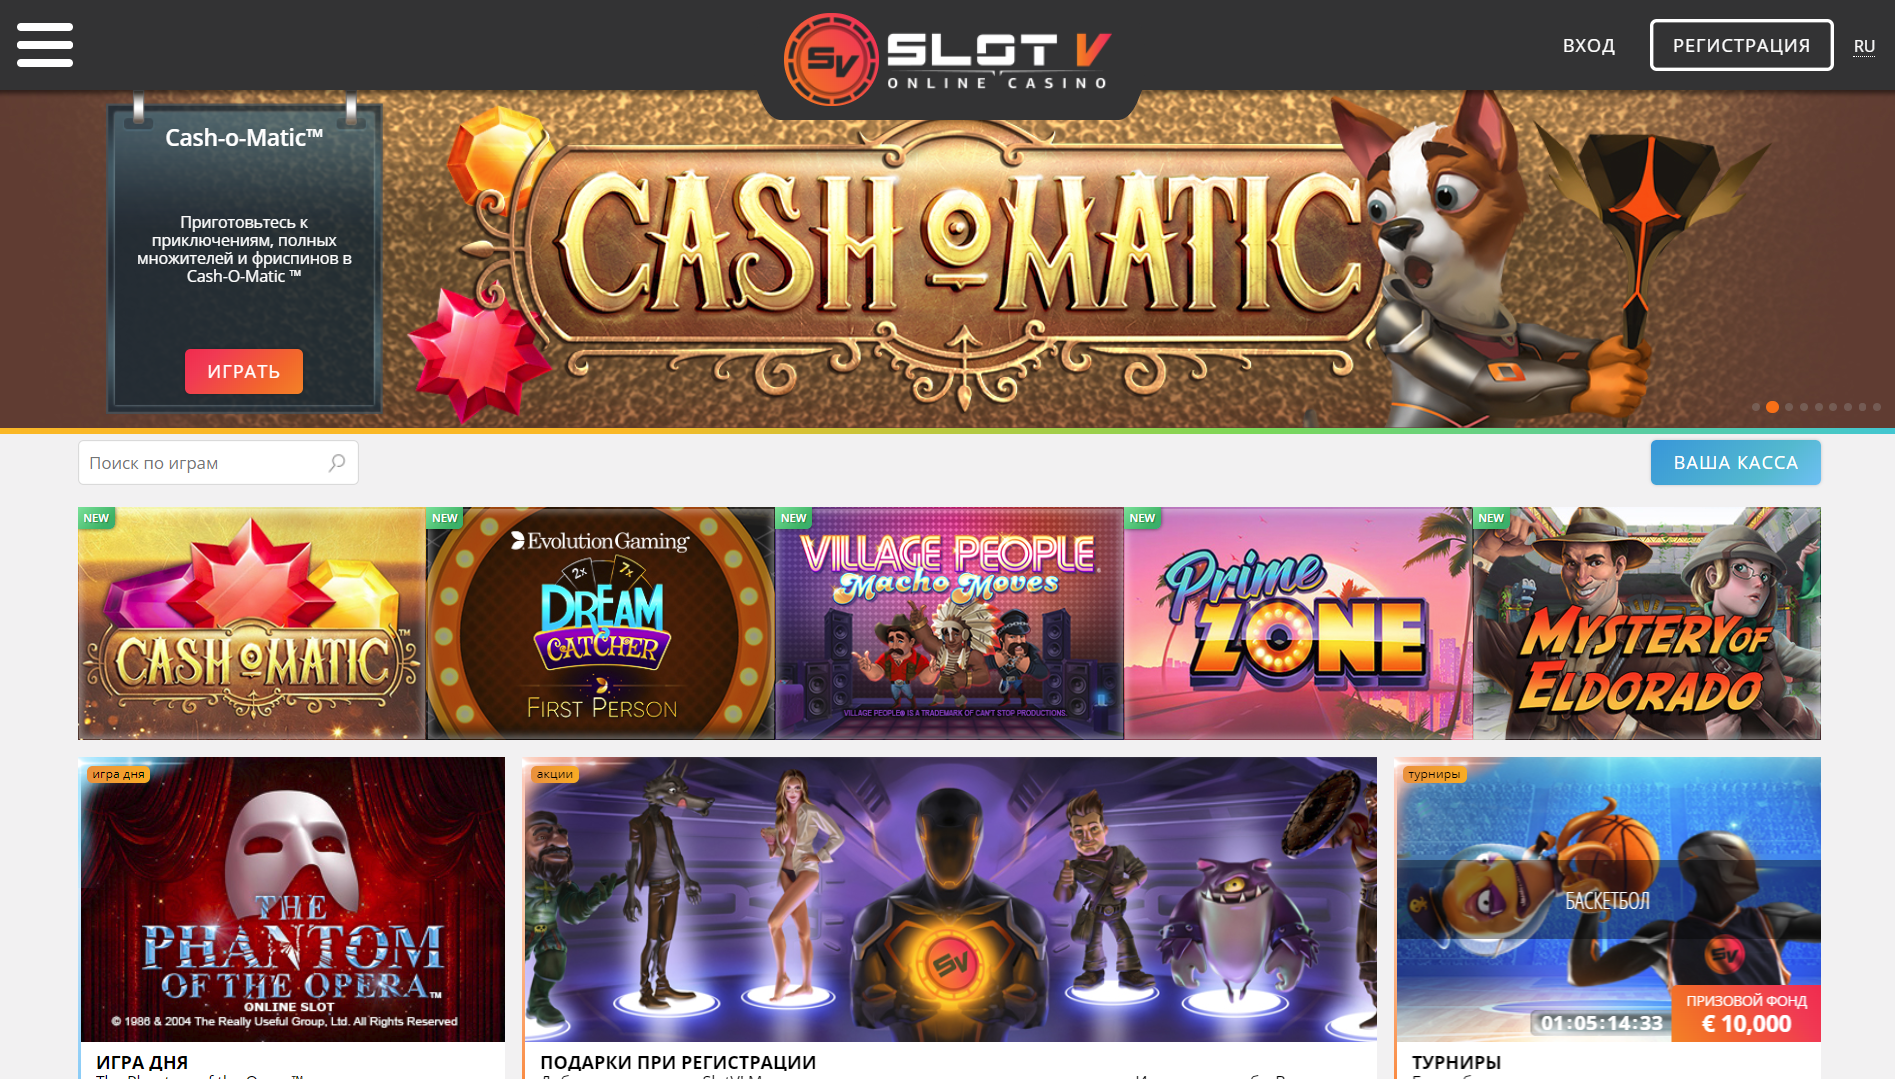 Slot v casino зеркало slot v online com вулкан онлайн официальный сайт казино